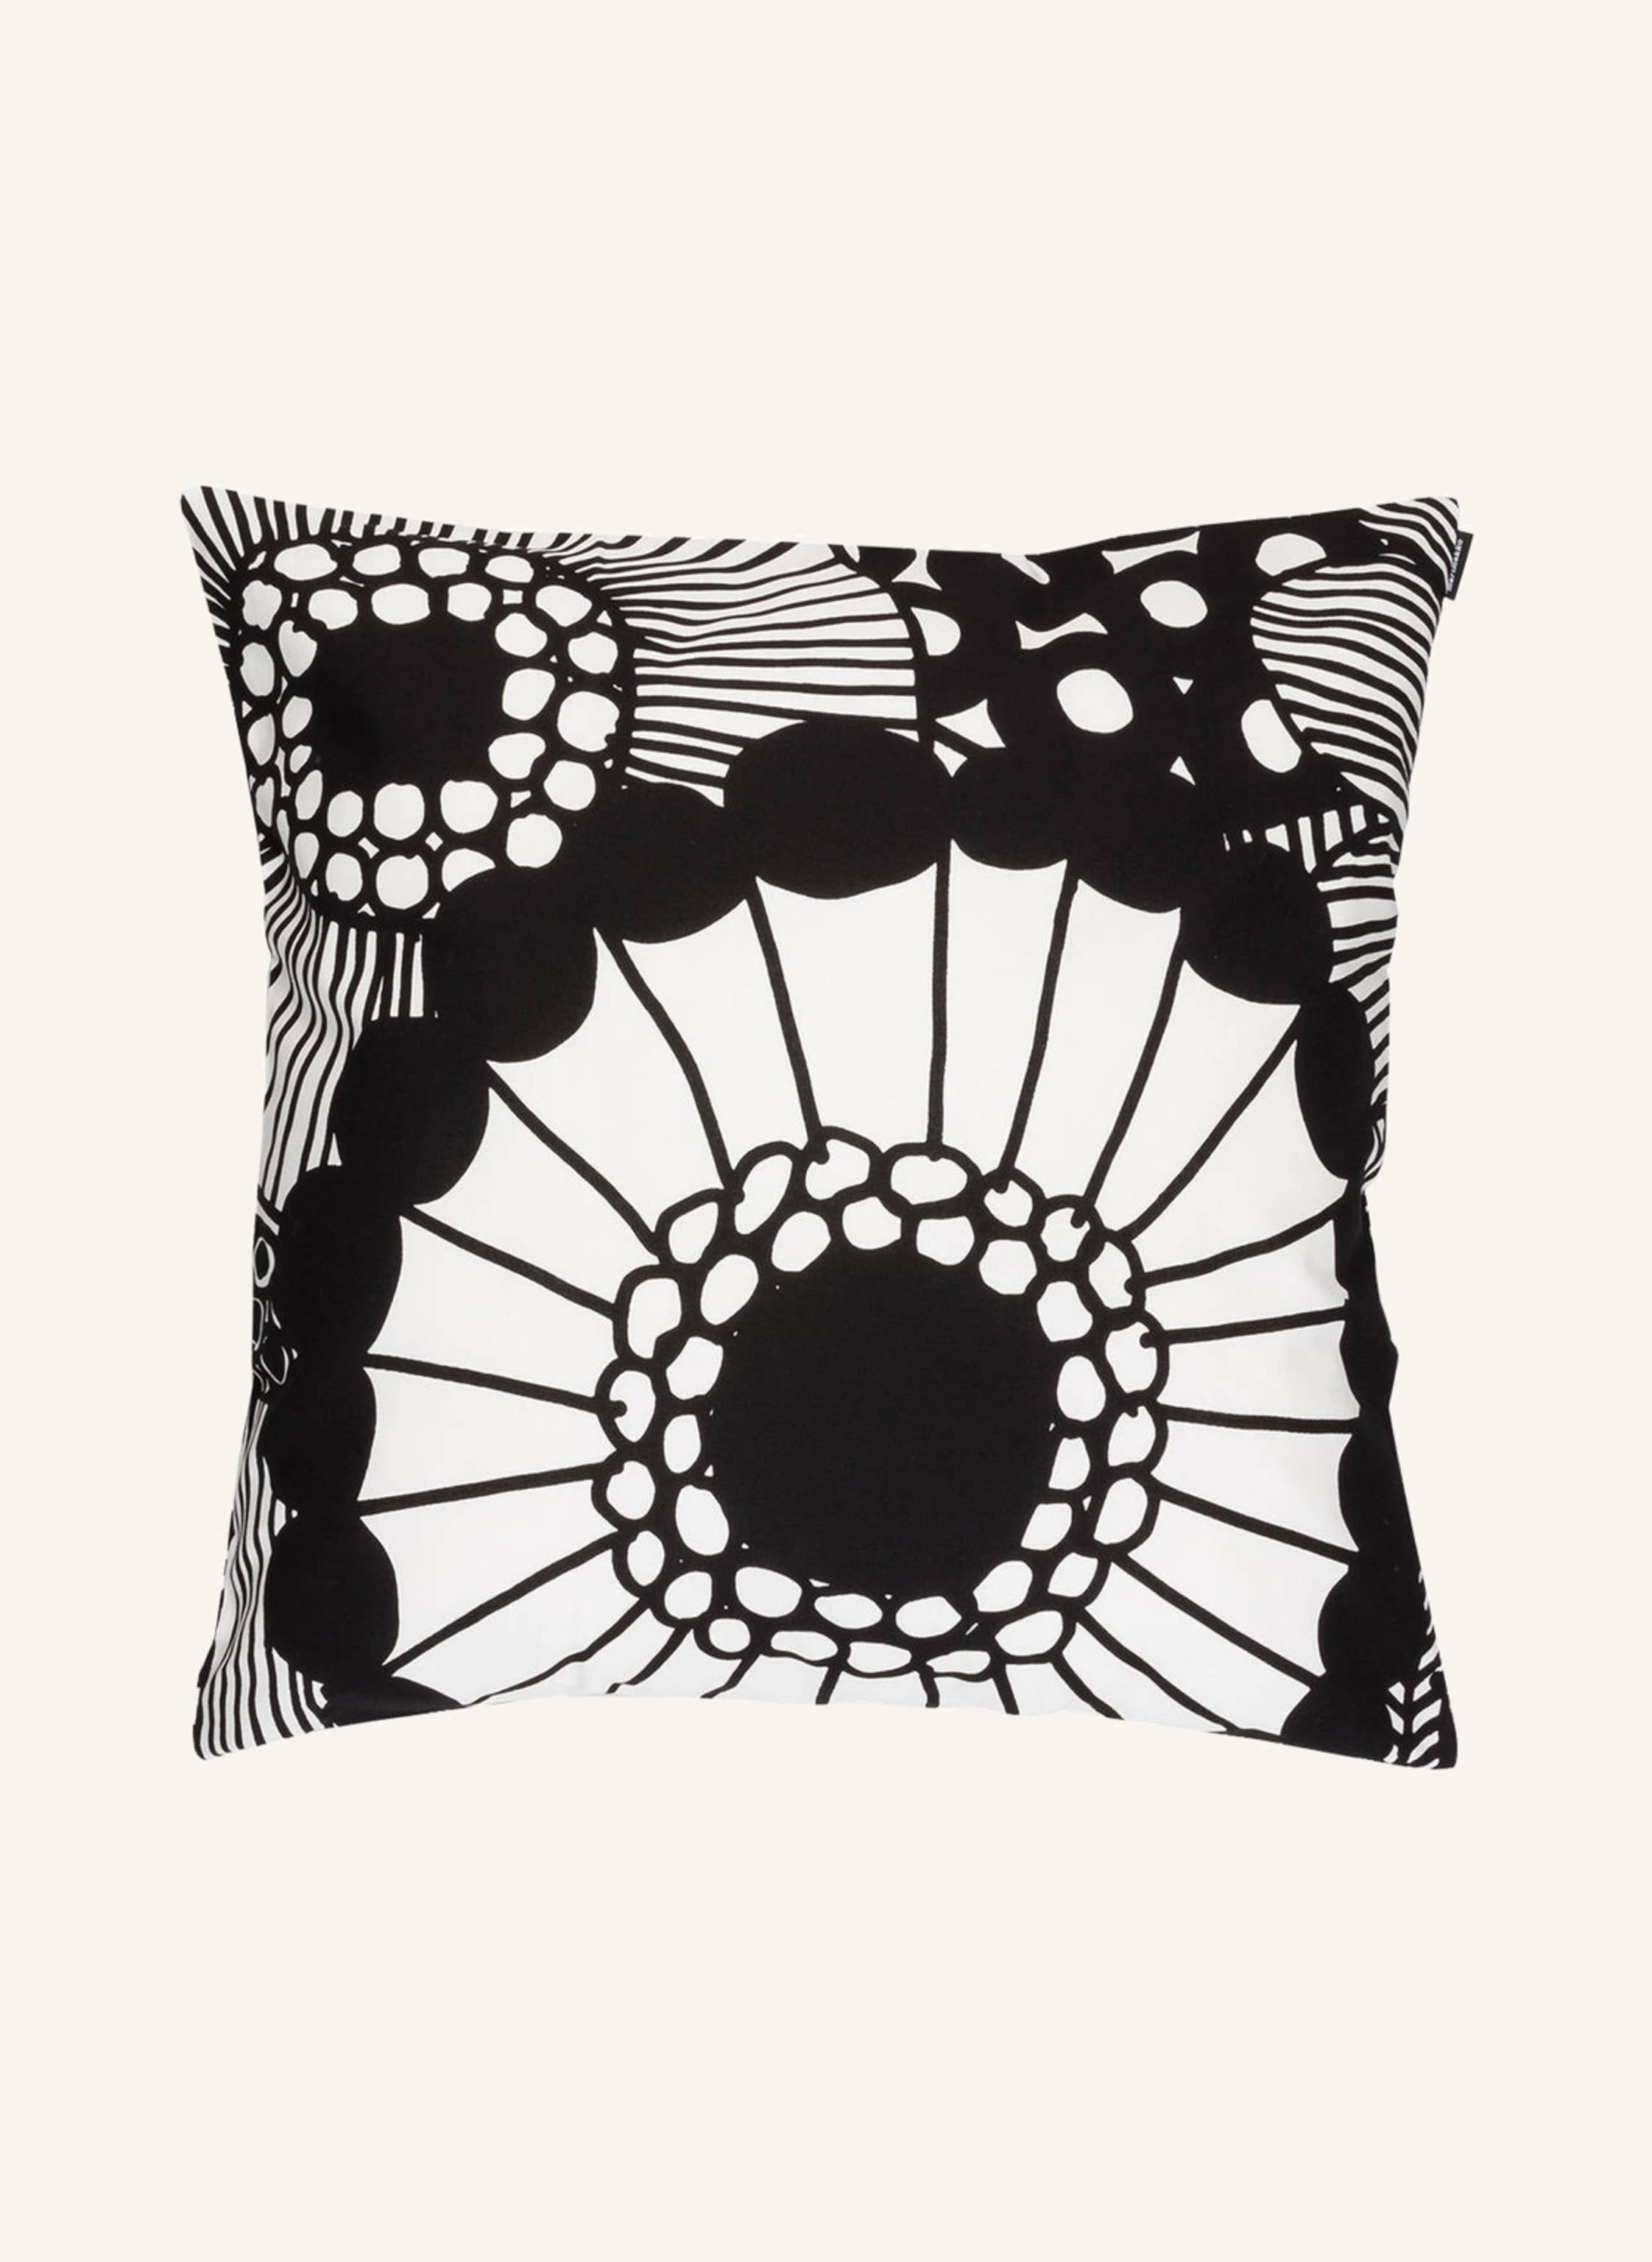 marimekko Decorative cushion cover SIIRTOLAPUUTARHA in black/ white |  Breuninger